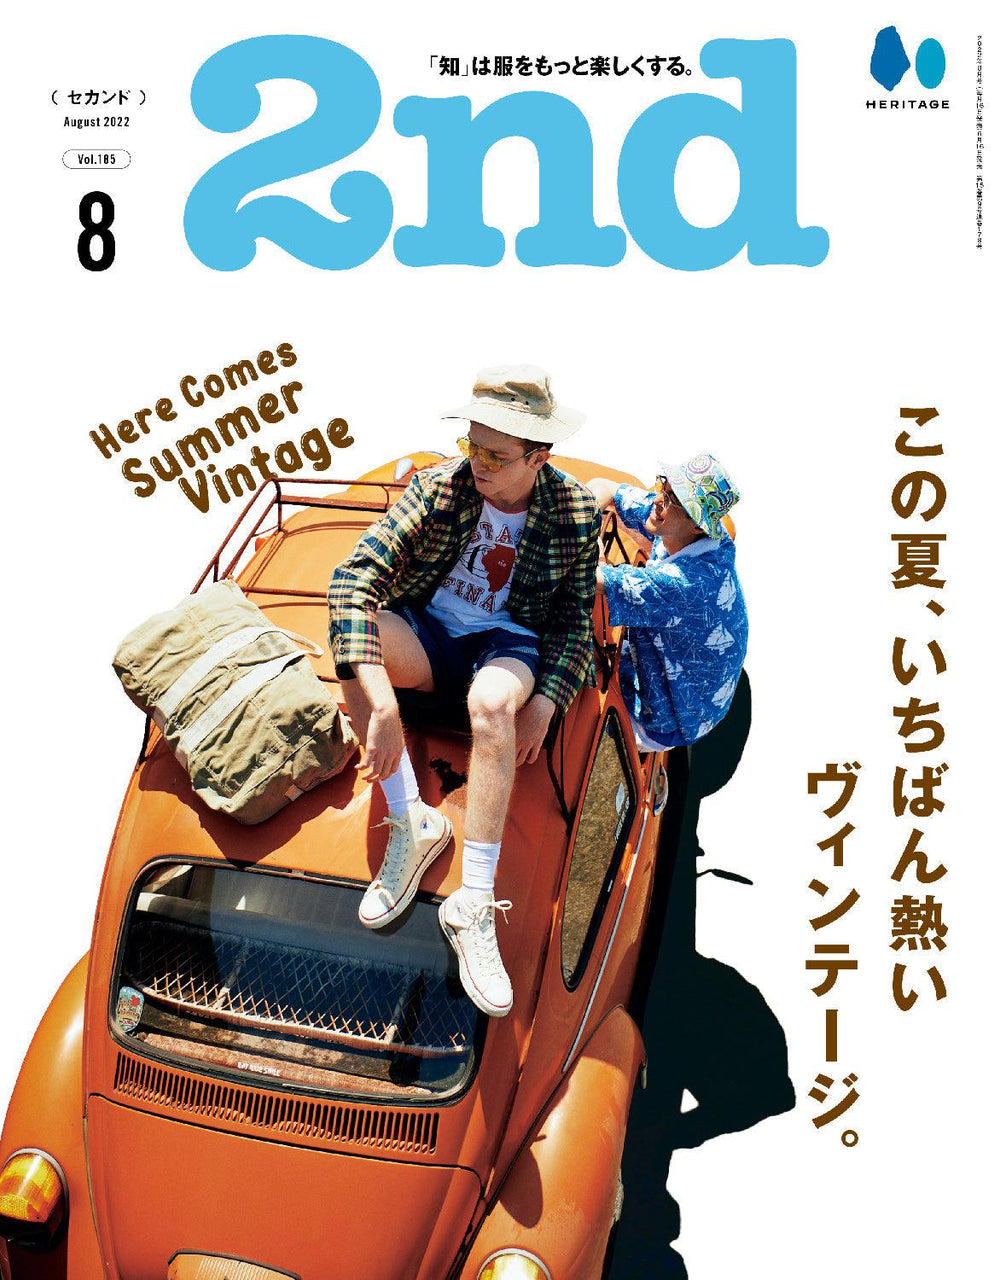 2nd Vol.185 "Here Comes Summer vintage "-Magazine-Clutch Cafe